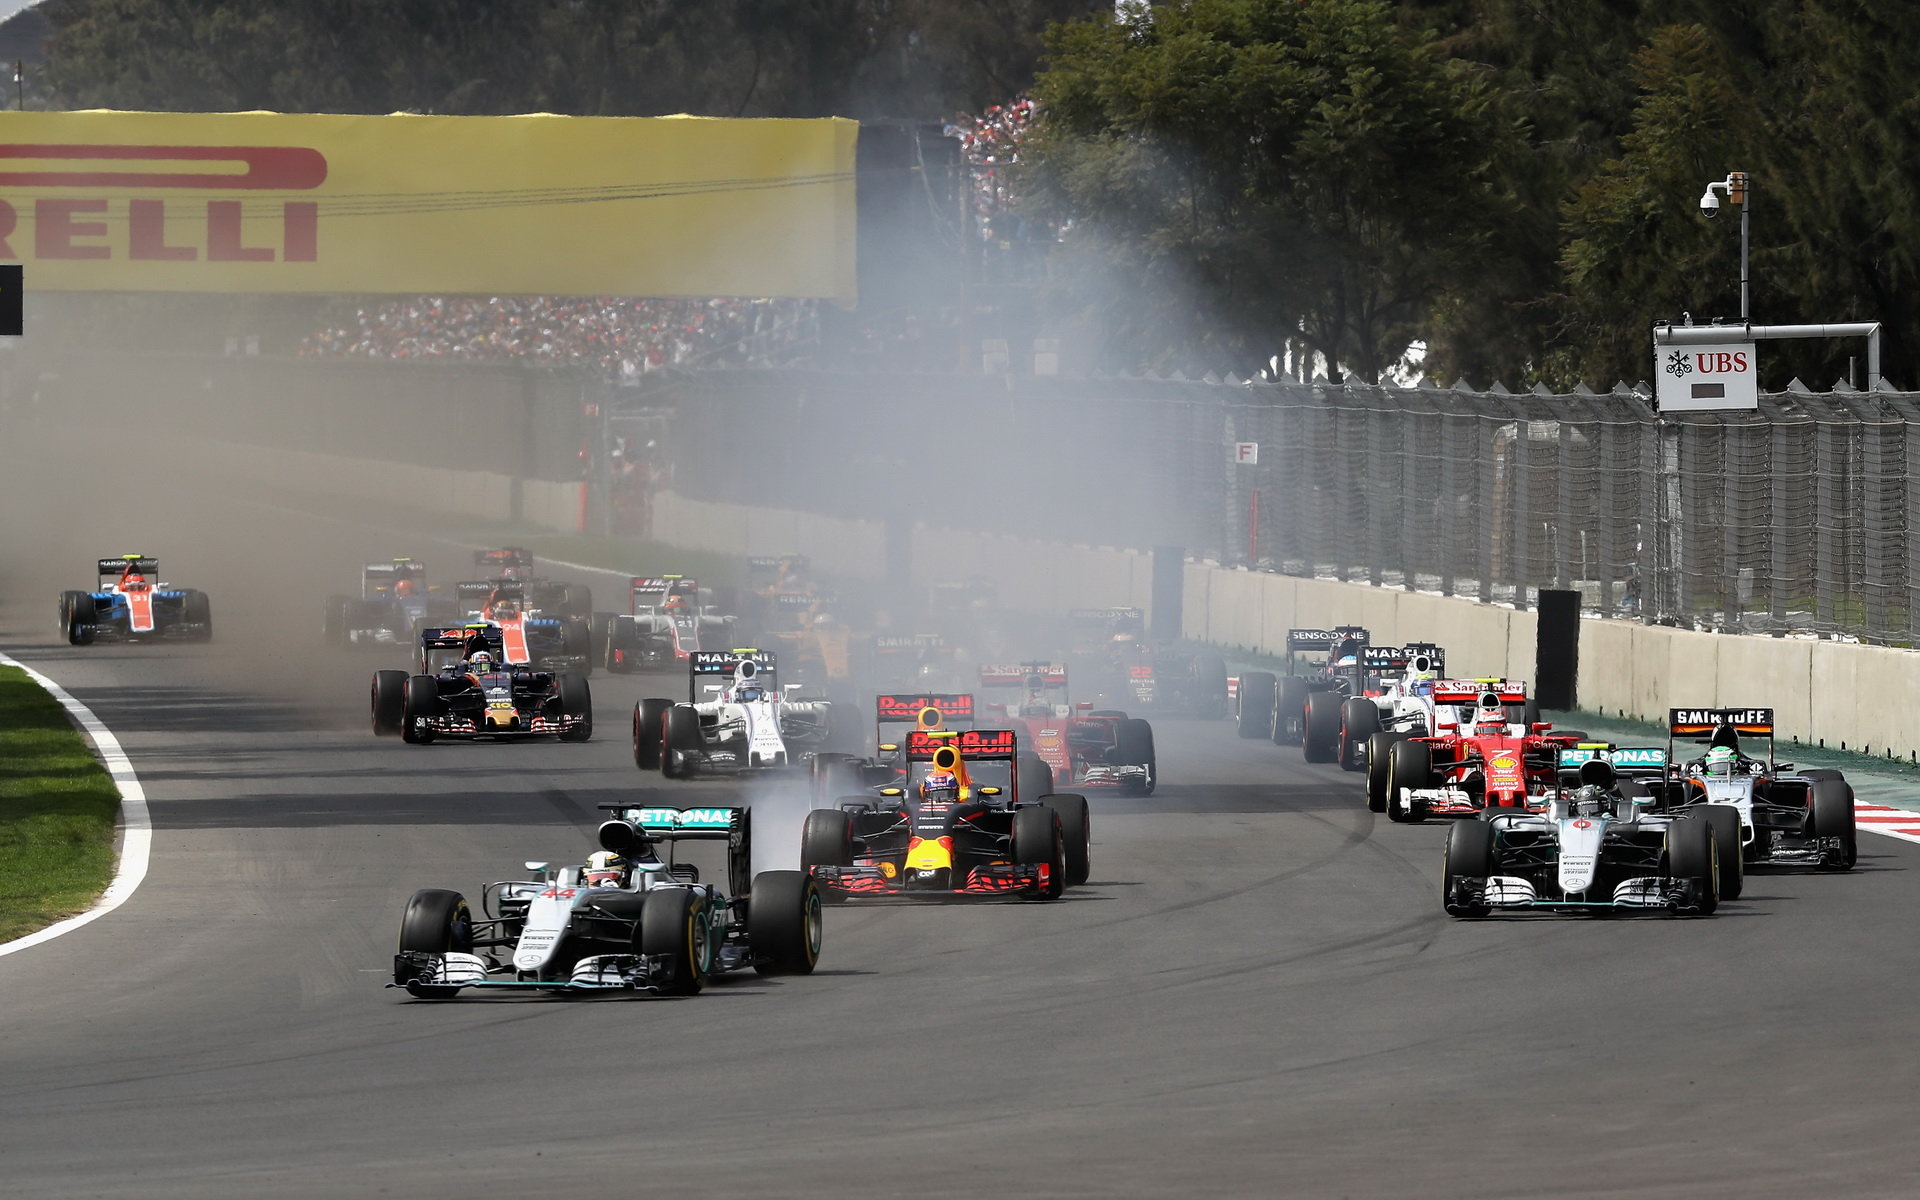 Úvod Velké Ceny Mexika se Felipemu Massovi povedl - předjel Bottase i Vettela